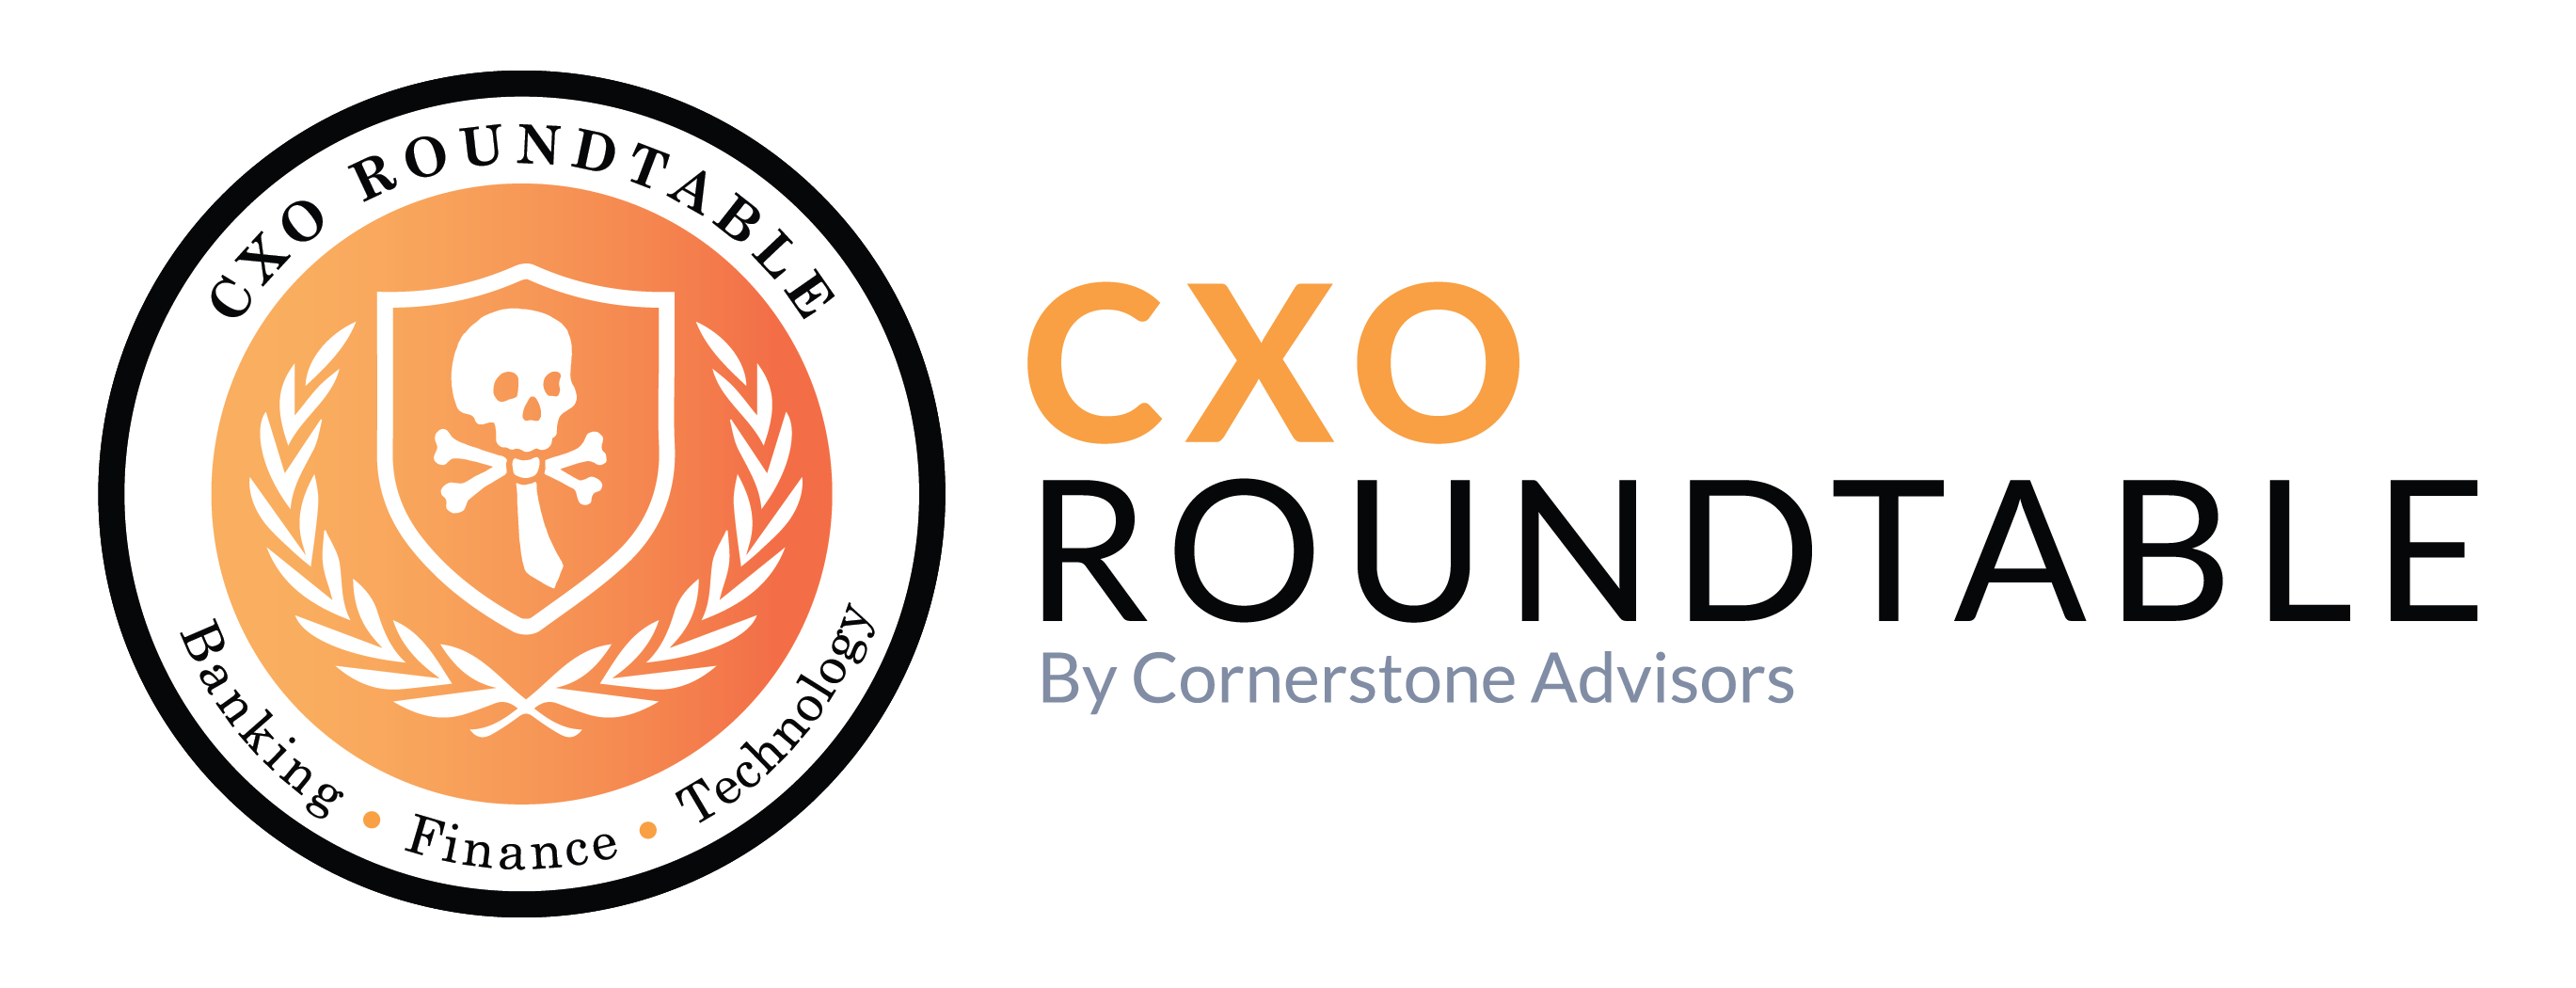 CXO Roundtable - Logo - Horizontal - Full Color